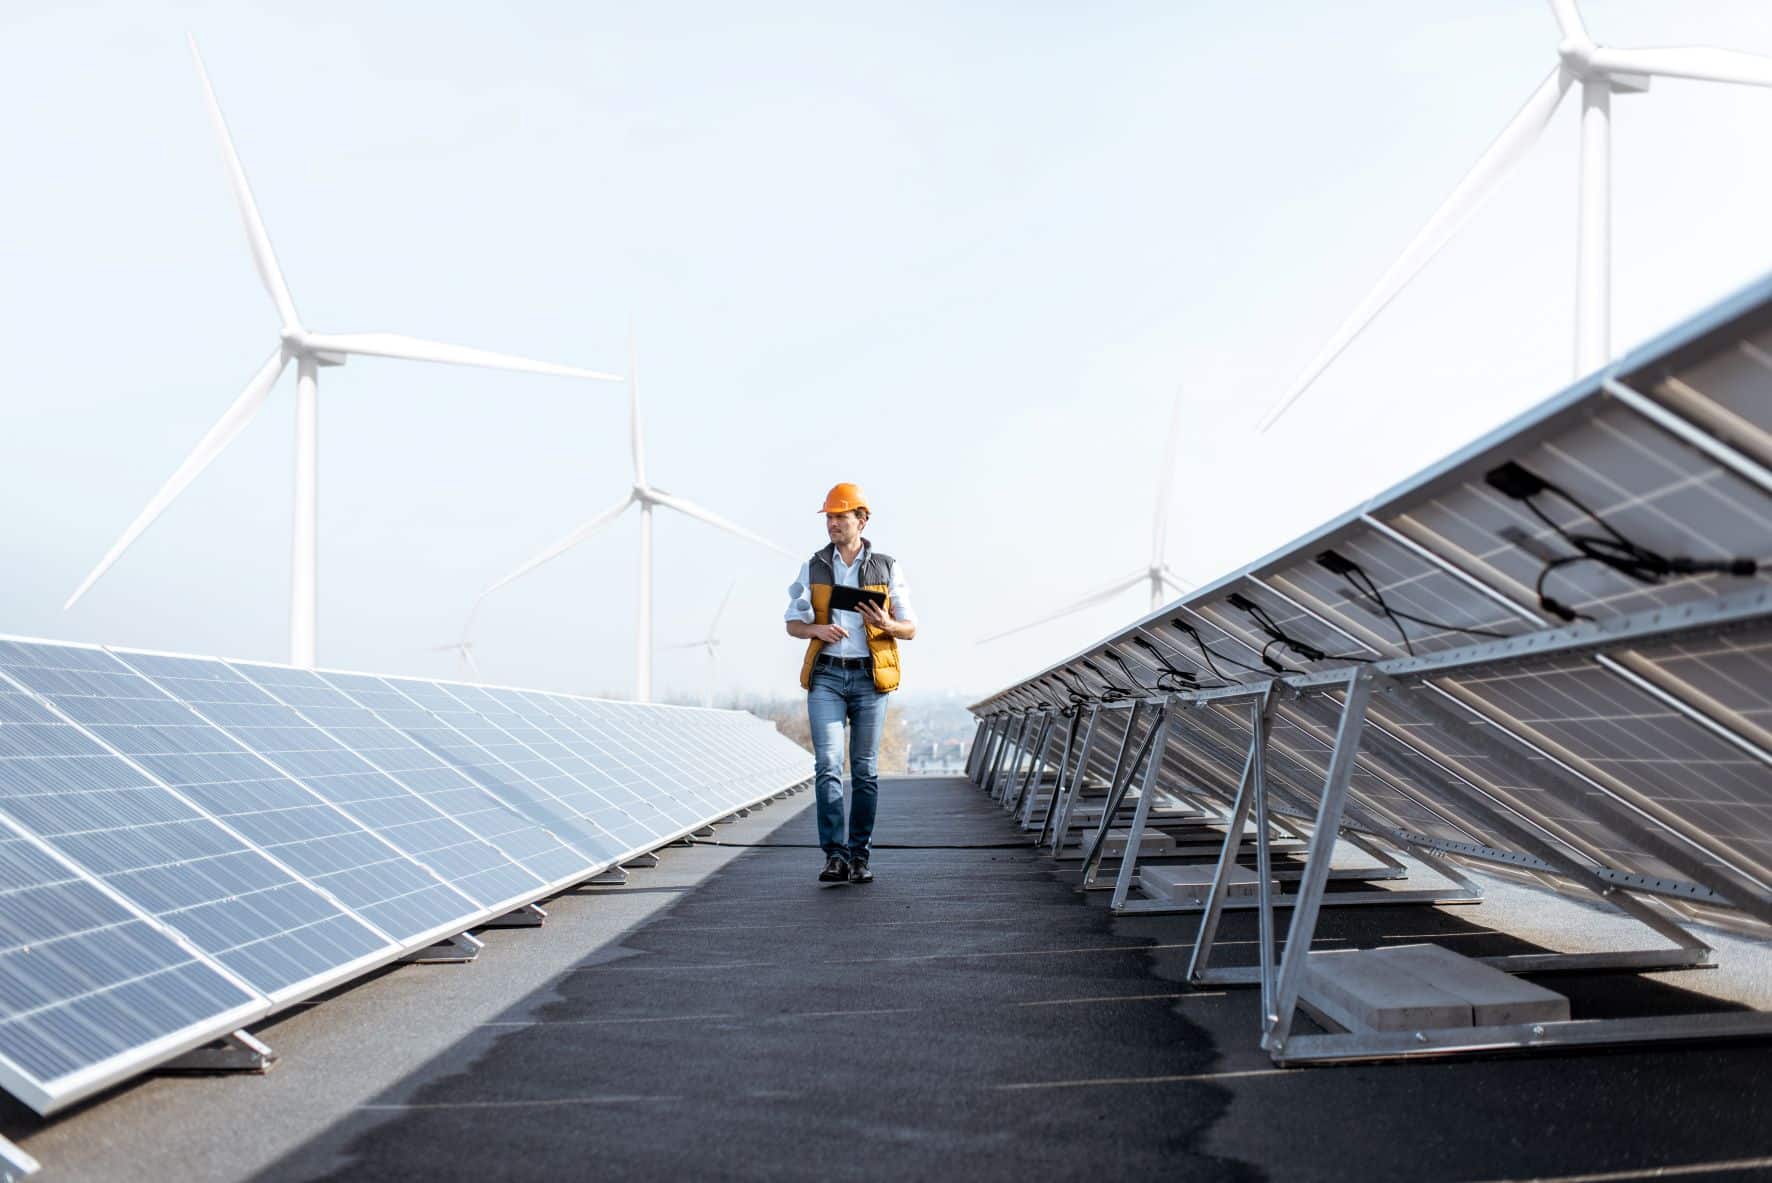 L'énergie solaire : simplement brillant - Fondation David Suzuki